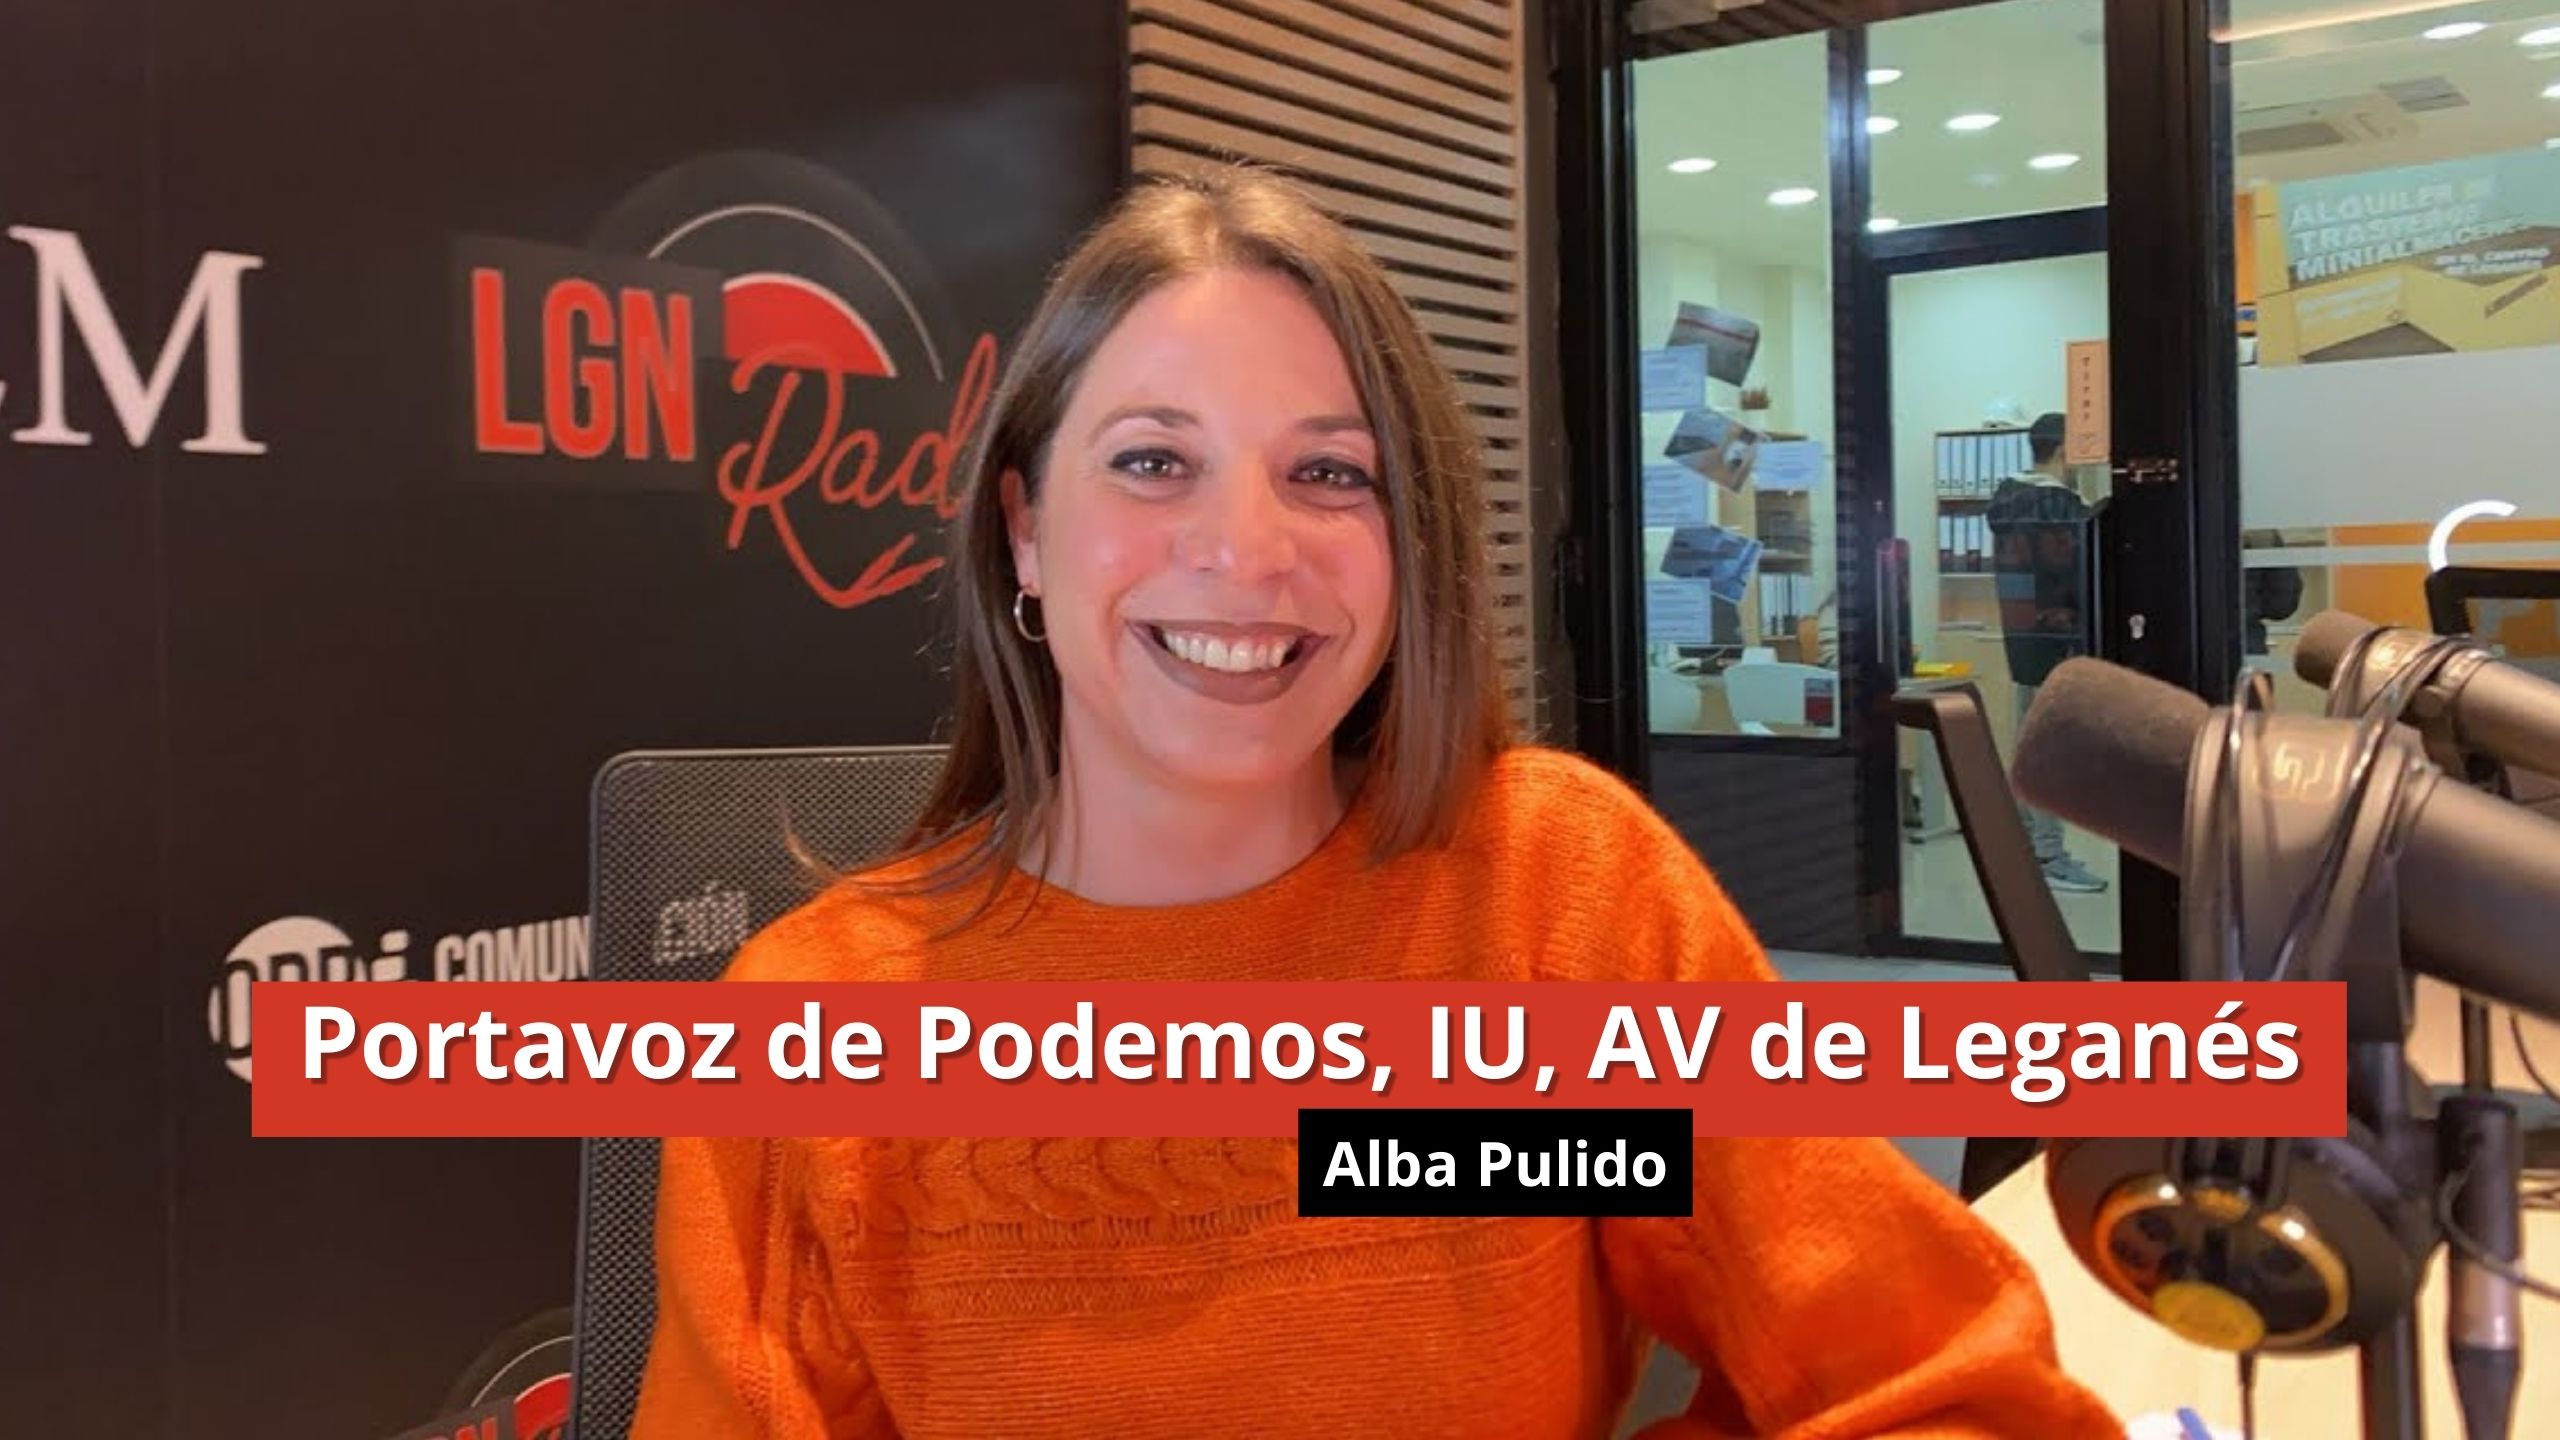 Entrevista a Alba Pulido. Portavoz de Podemos, IU, AV de Leganés